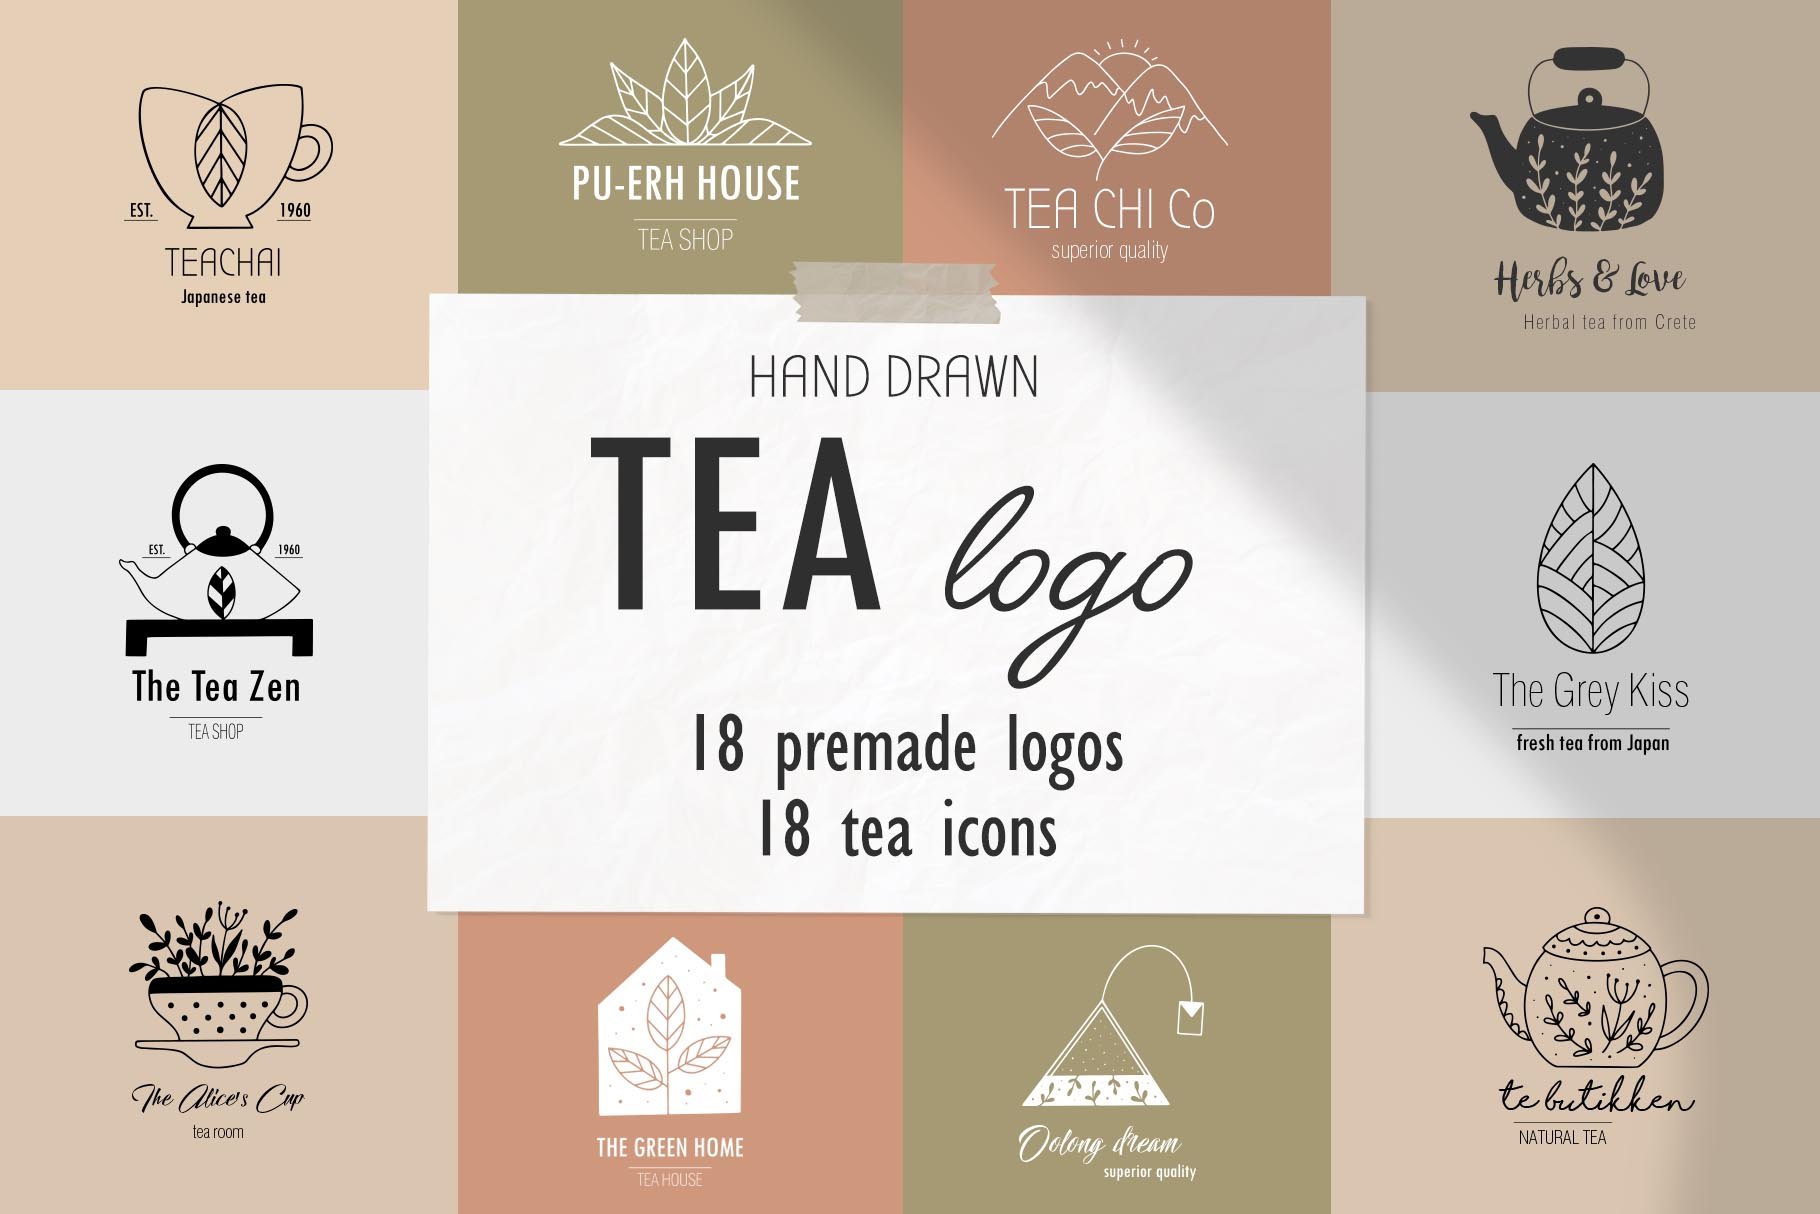 Tea Stall Flex Banner Design | Download Tea Stall Flex Banner Design for  Free